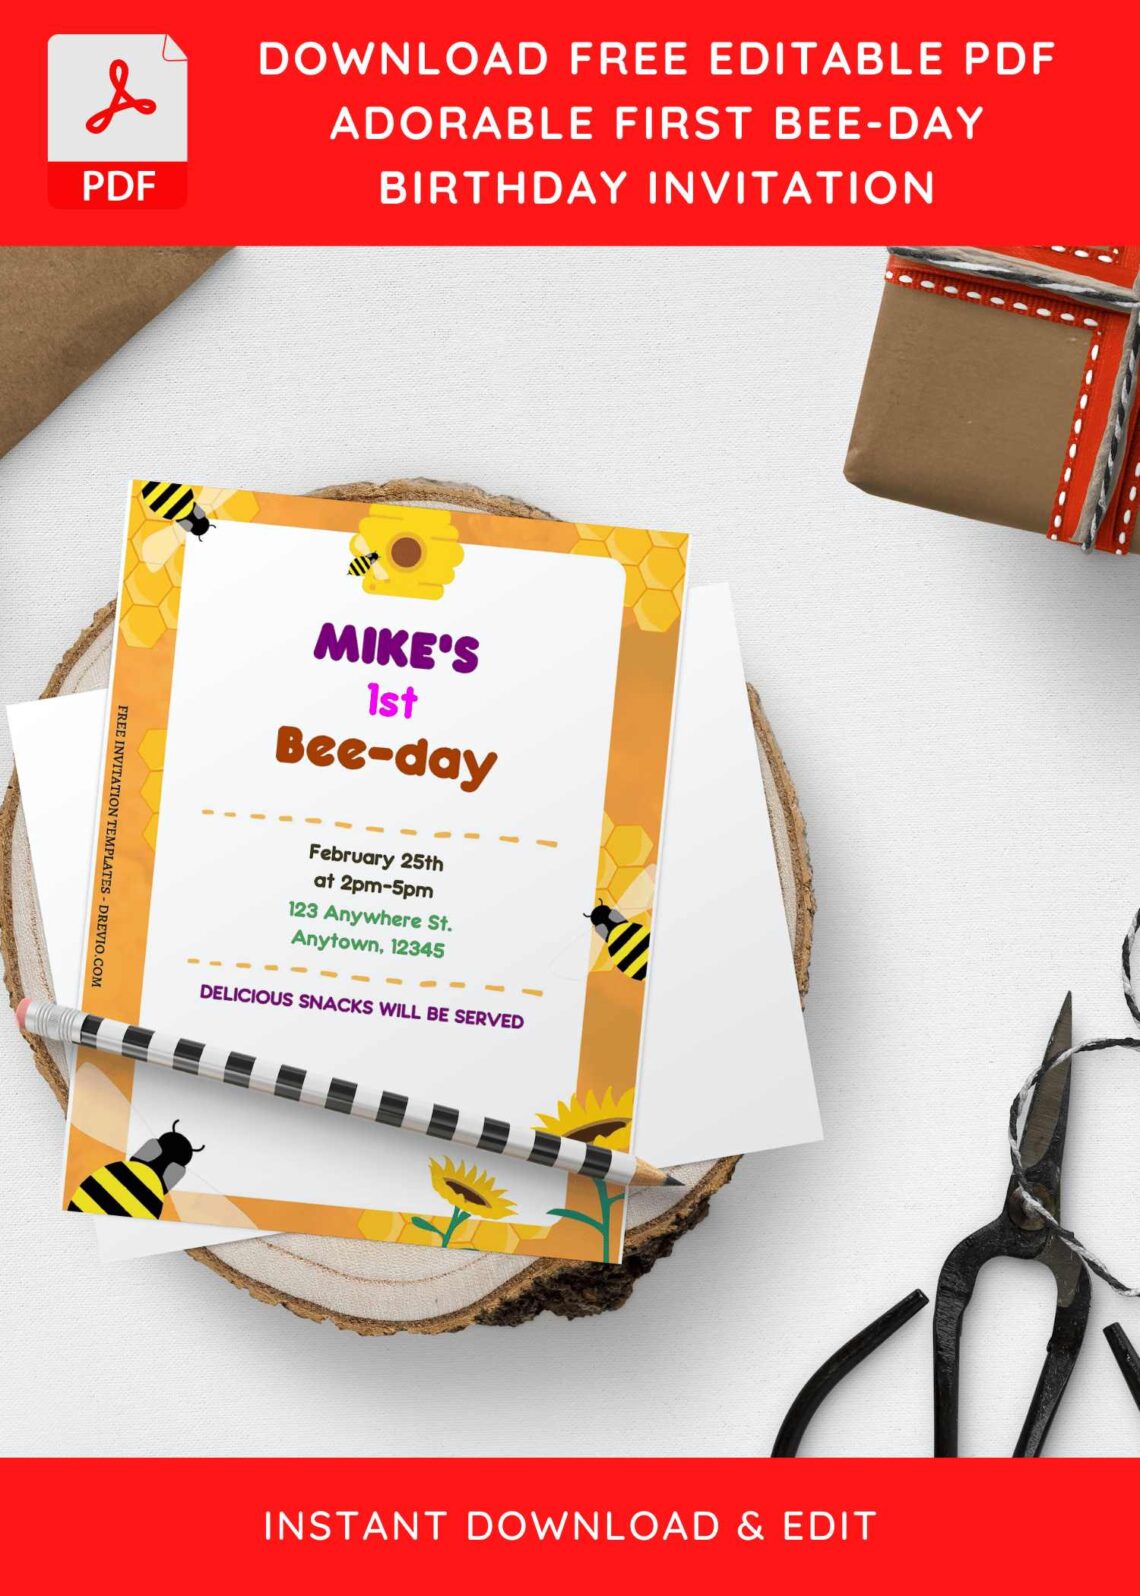 (Free Editable PDF) Adorable Kids Bee-Day Birthday Invitation Templates